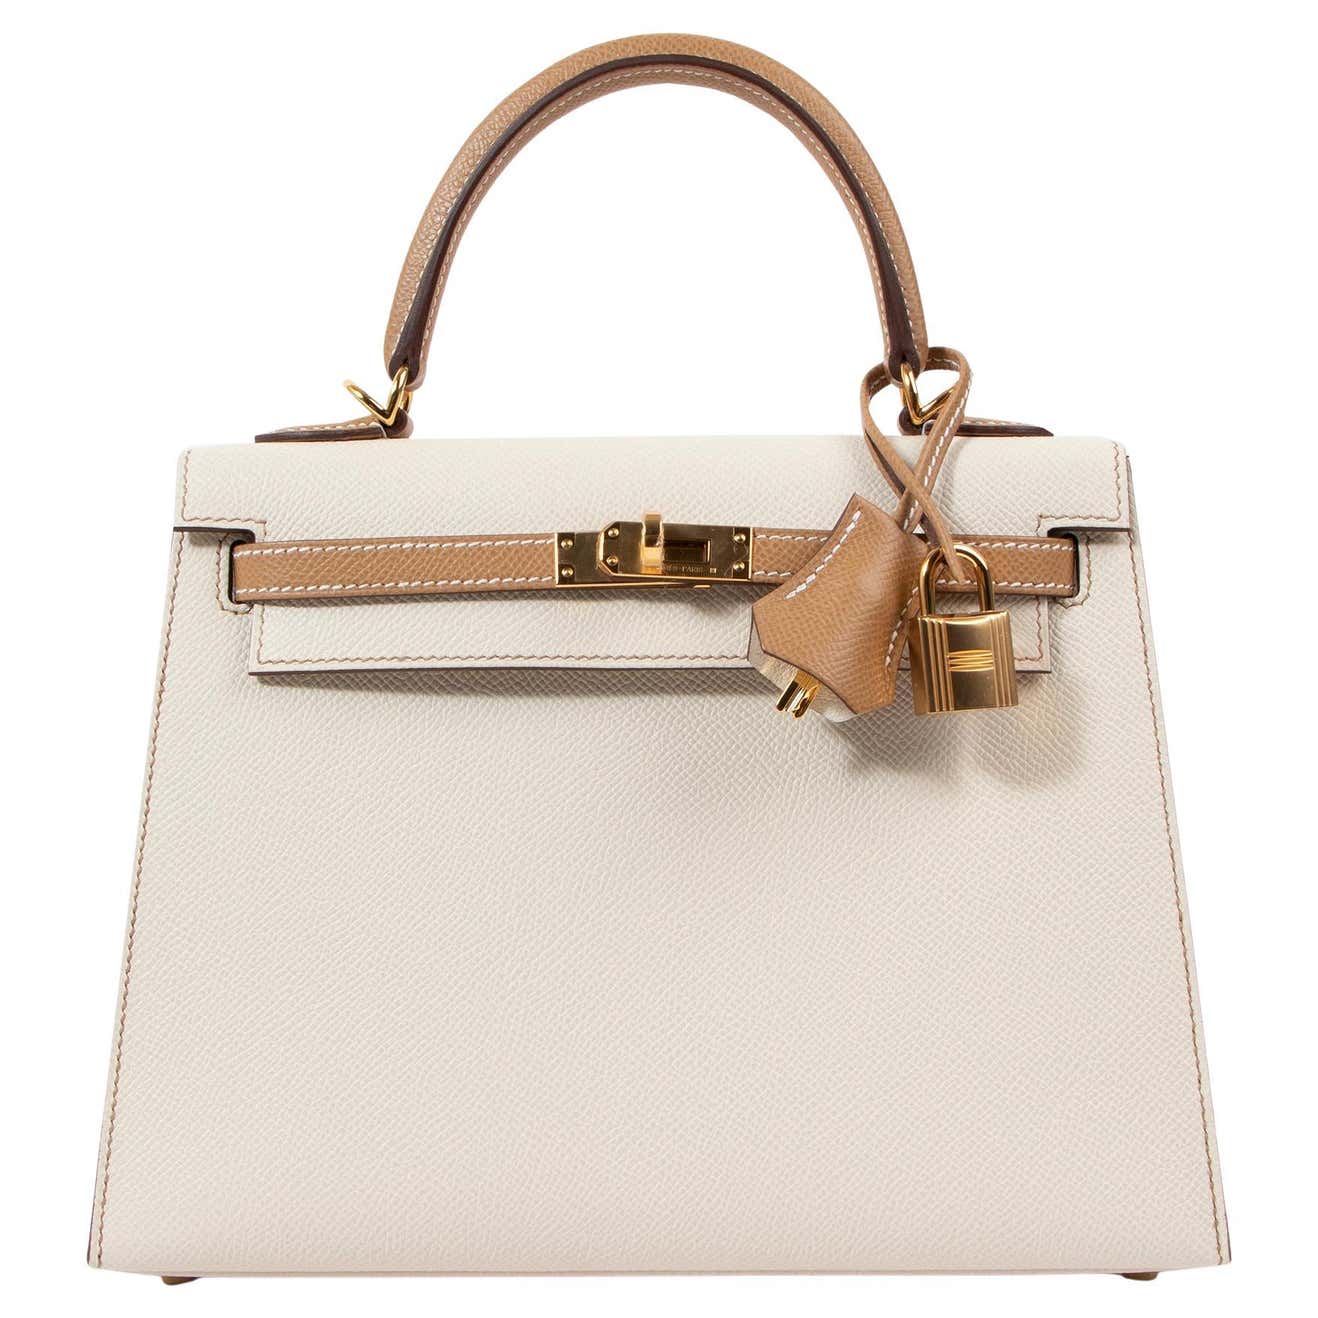 Hermes Birkin Bag Price List — Collecting Luxury